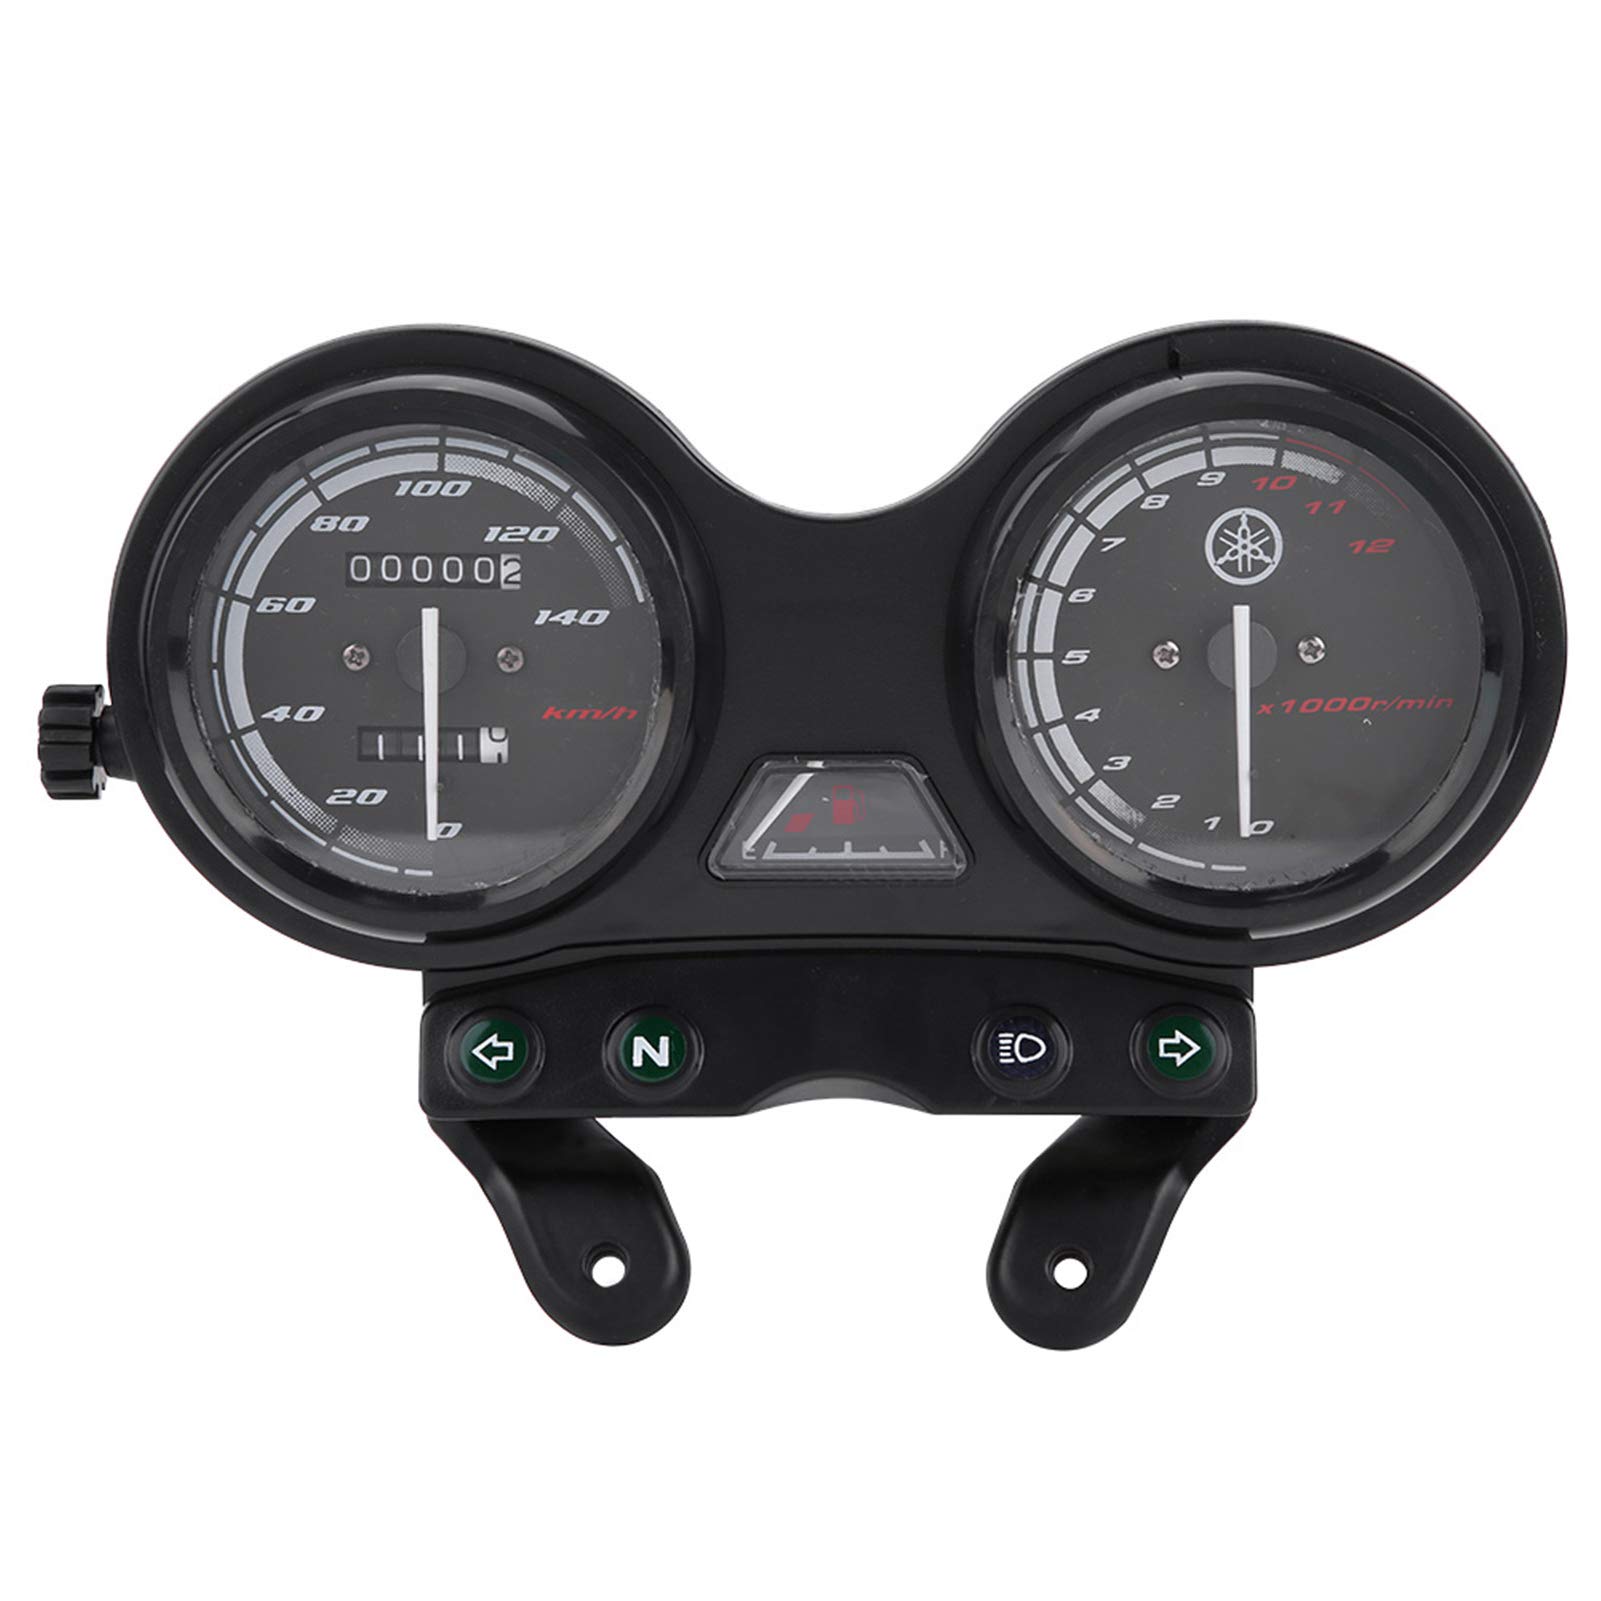 Motorrad-Tachometer Dual-Kilometerzähler für YBR 125 DC 12-V-Ölanzeige Motorrad 12000 U/min LCD-Kilometerzähler Motorrad-Tachometer von Ymiko